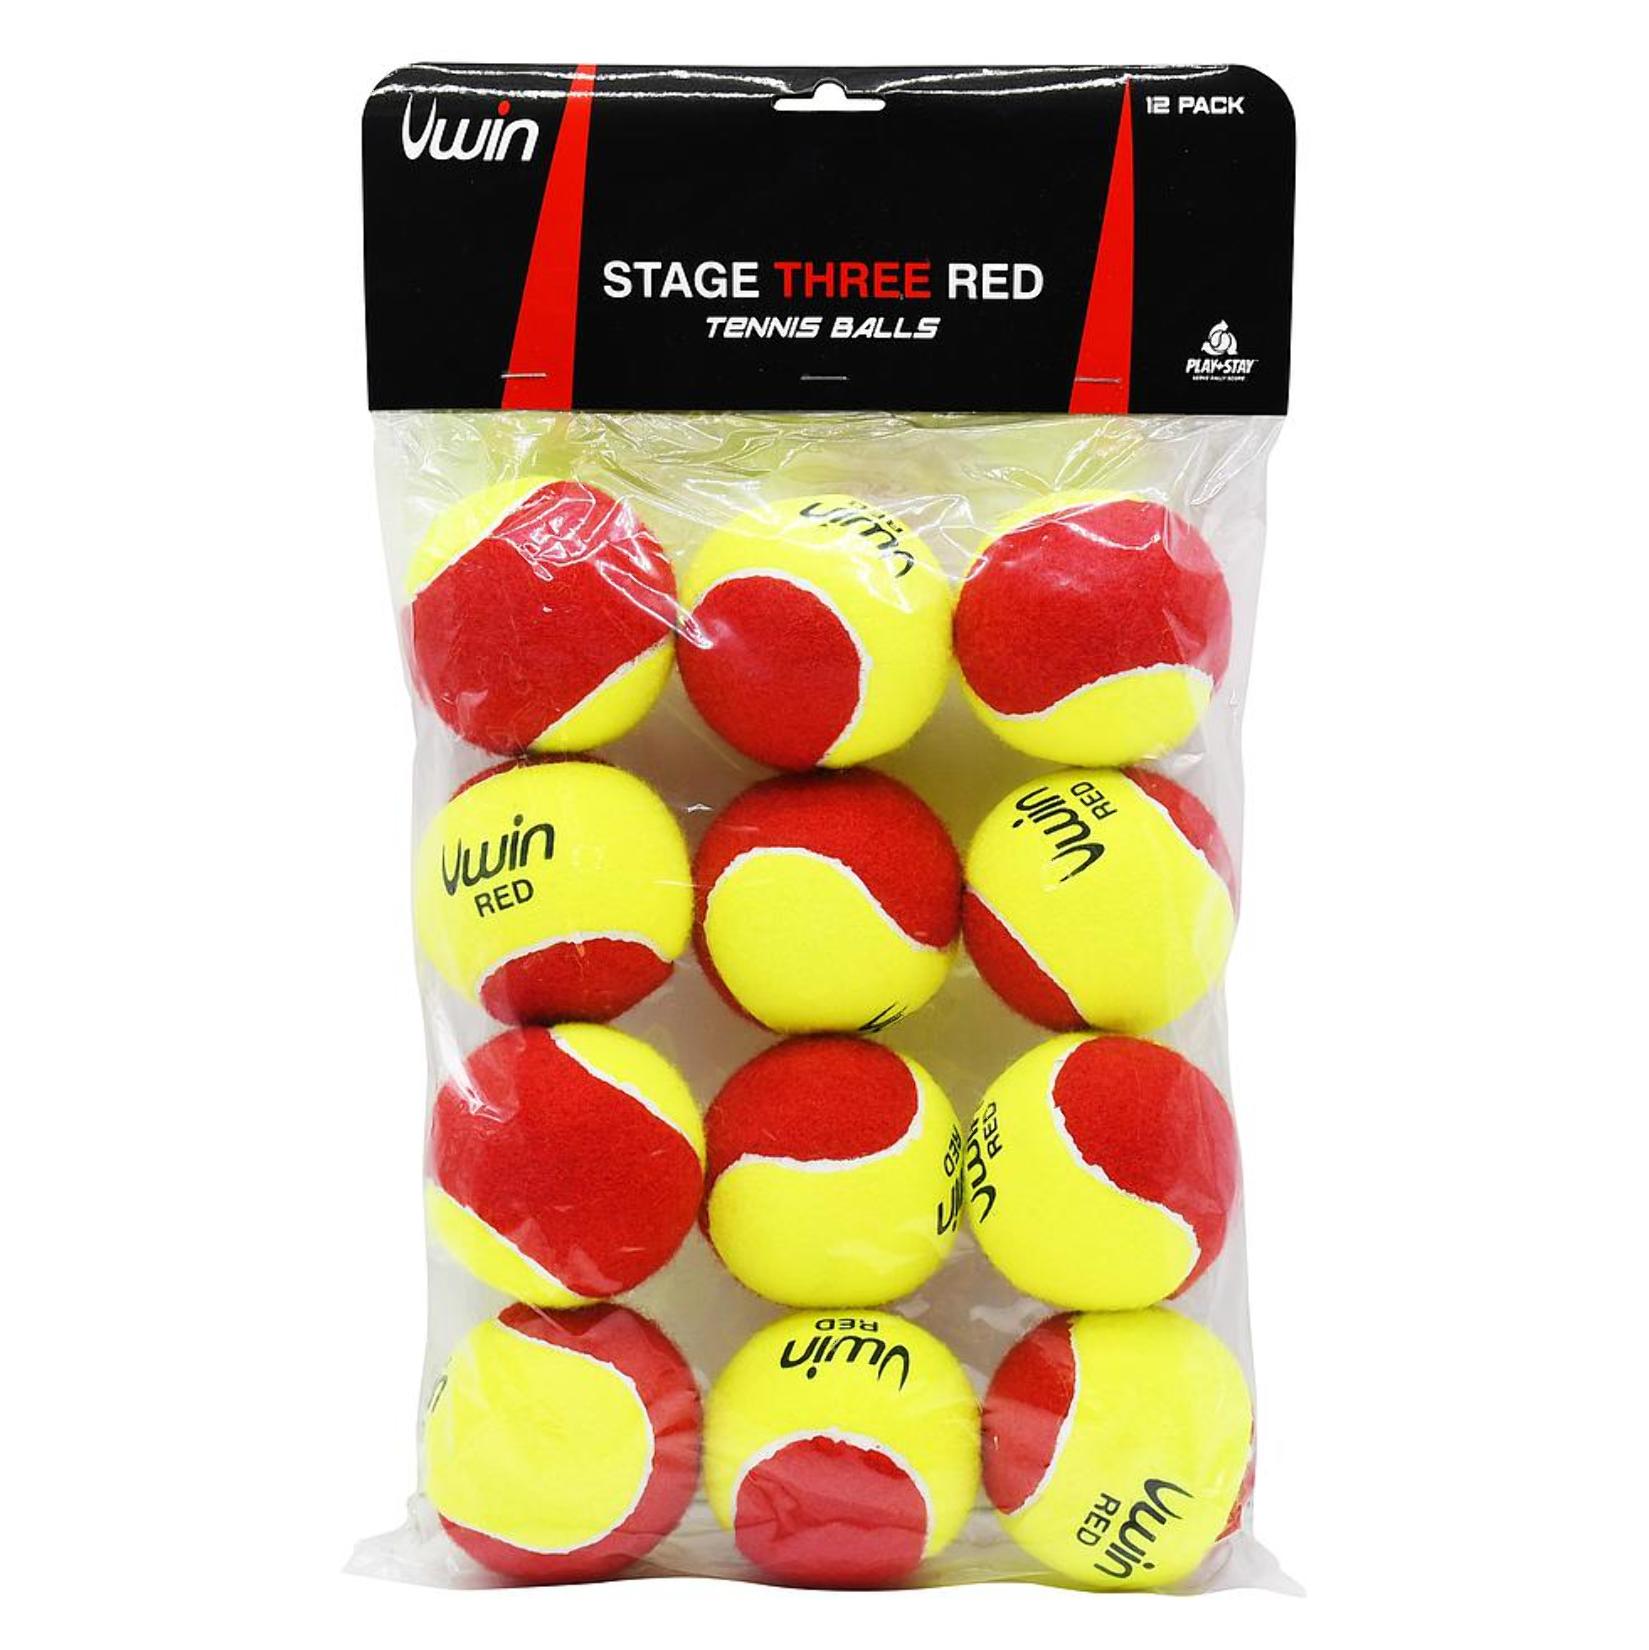 Uwin Stage Three Red Tennis Balls